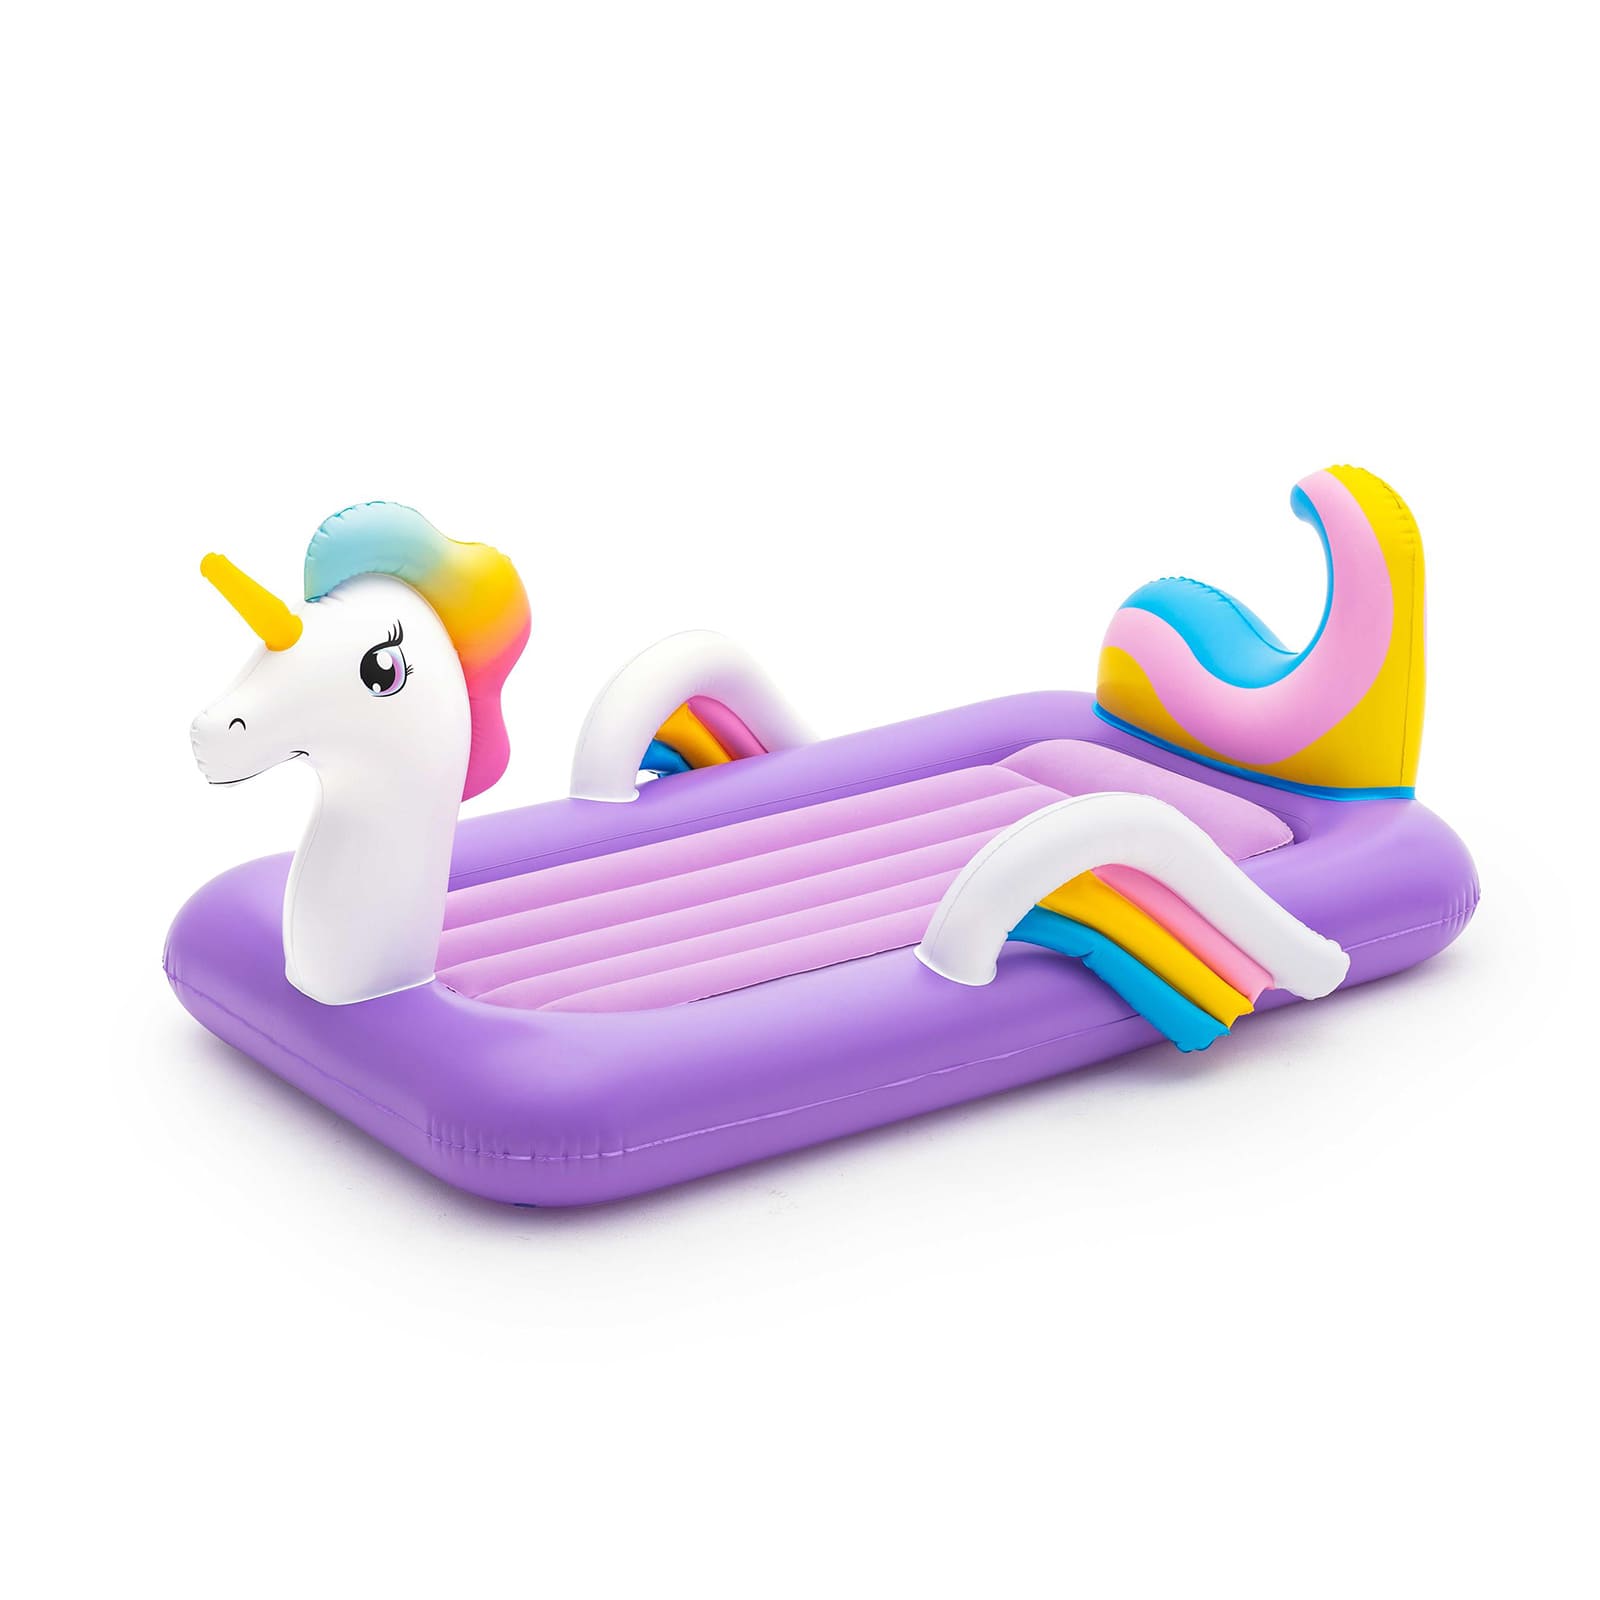 Colchón inflable infantil Unicorn DreamChaser de Bestway